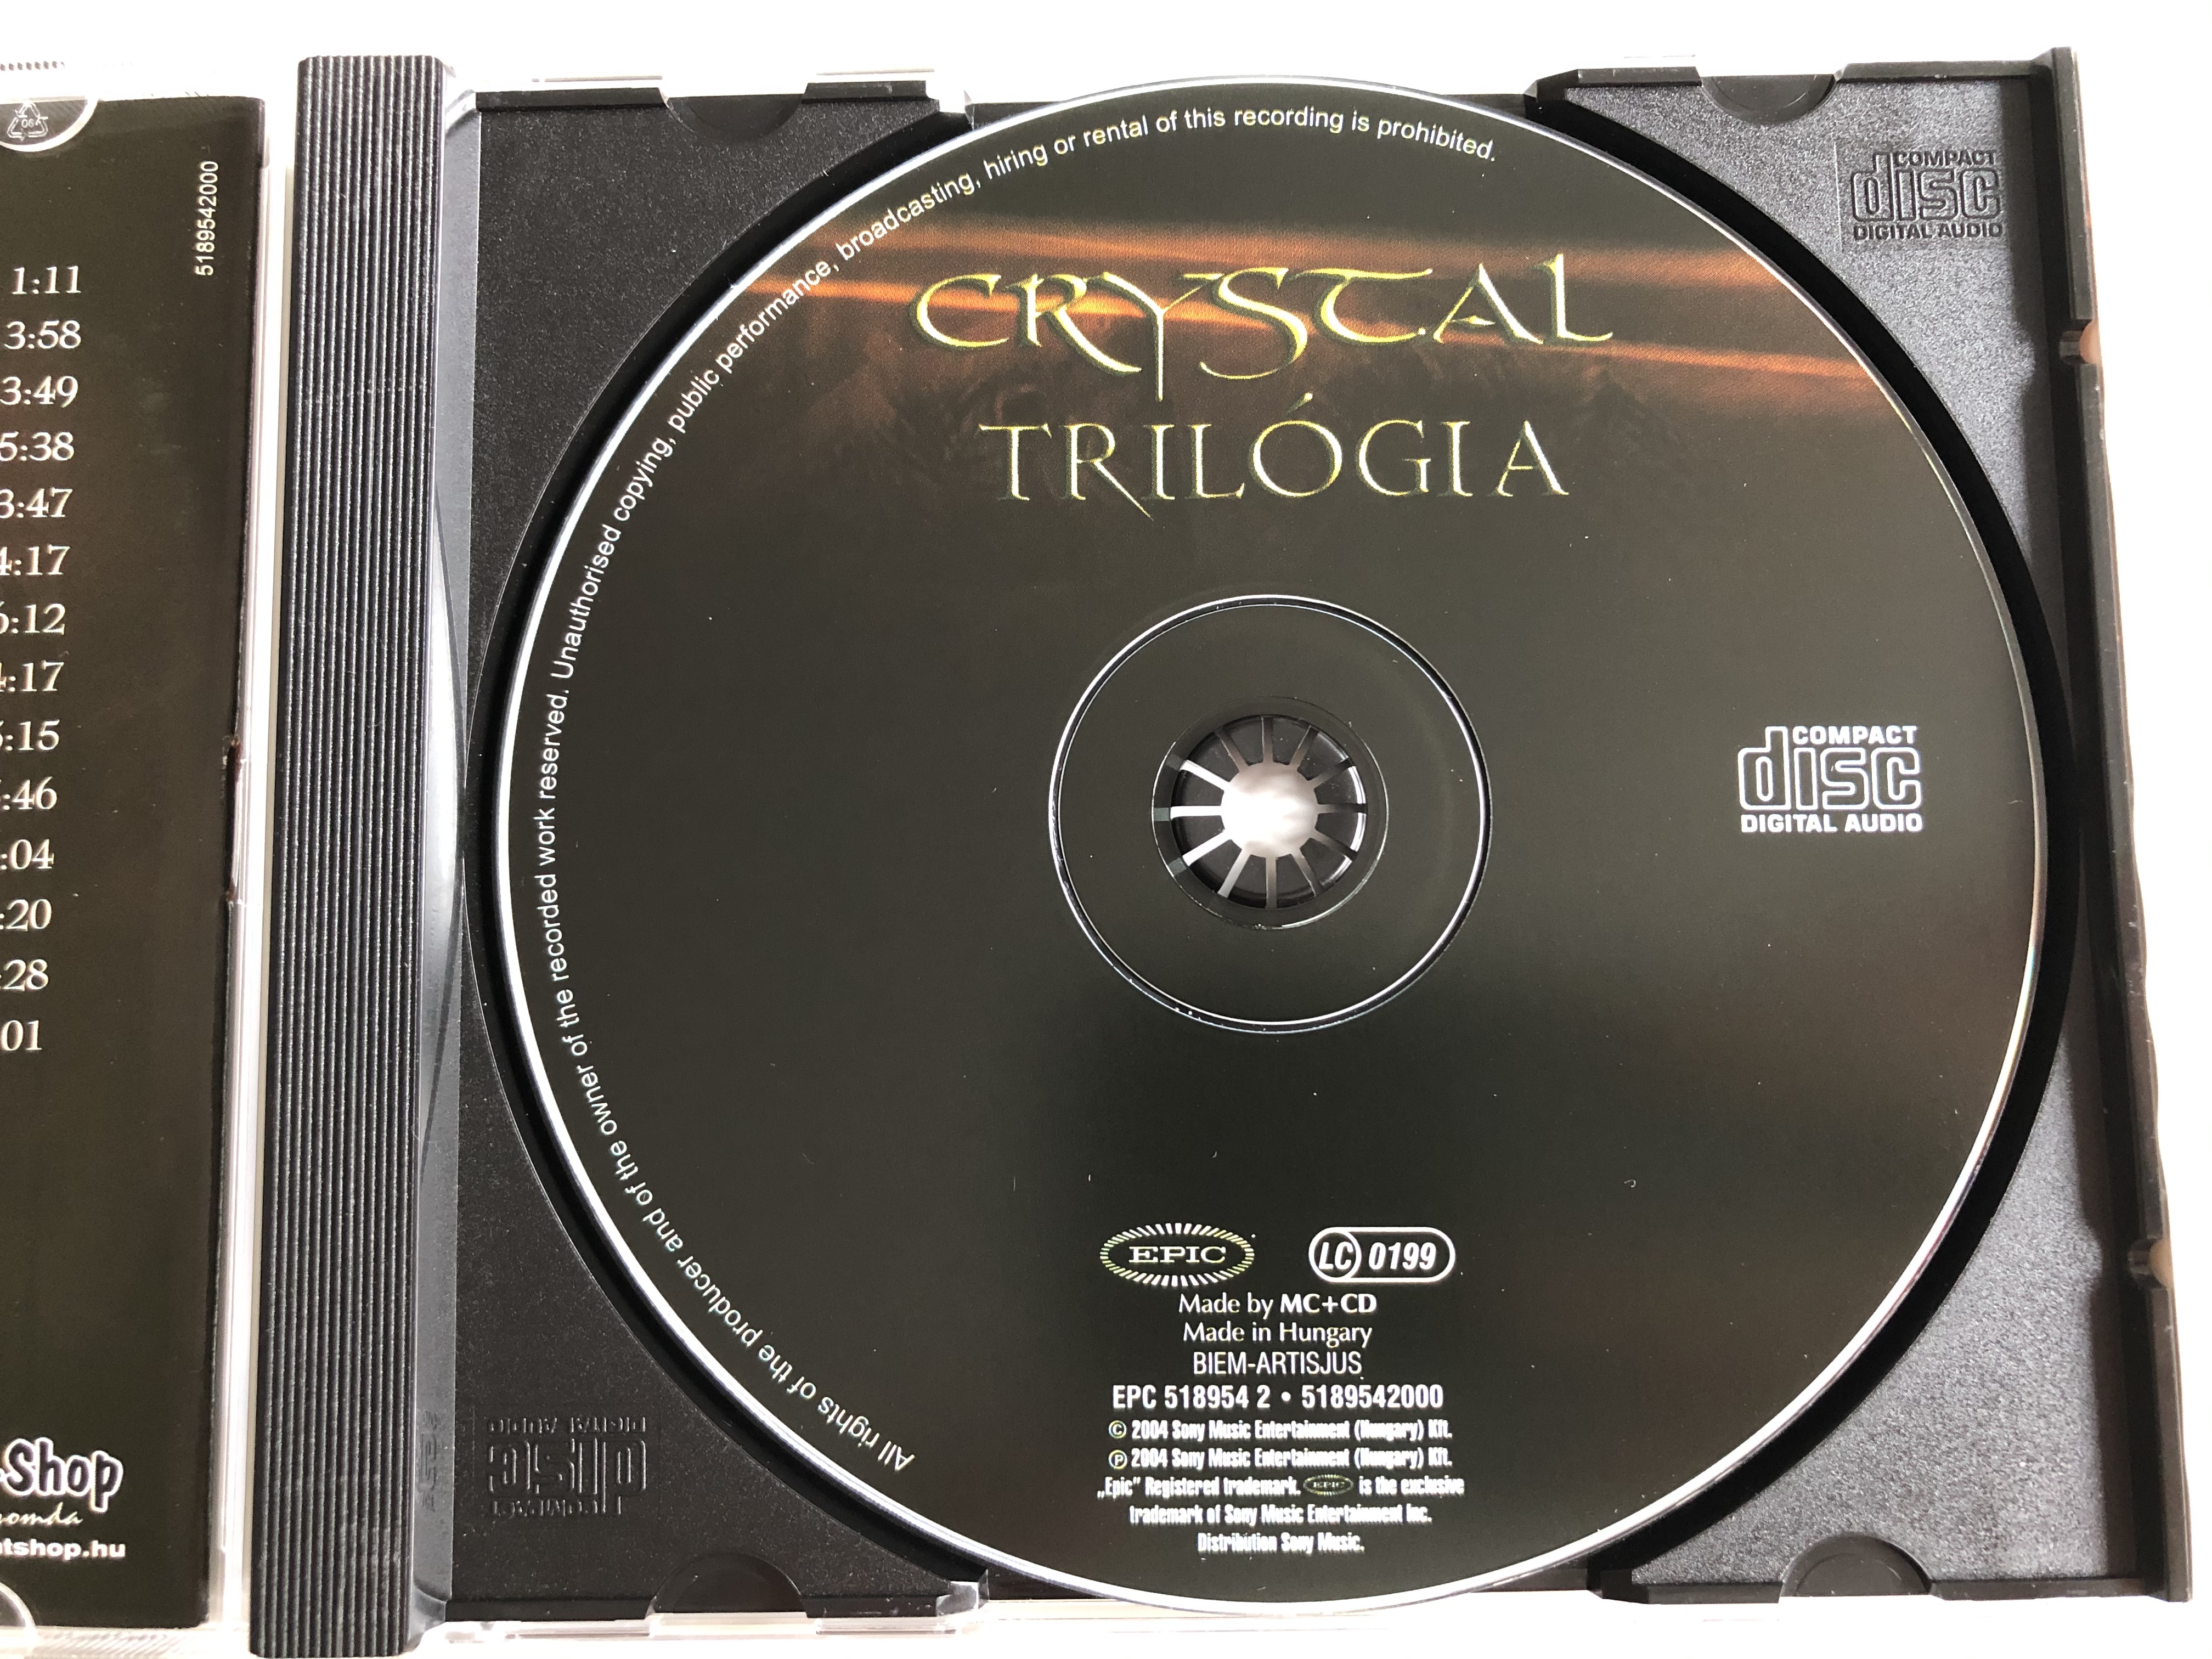 crystal-tril-gia-epic-audio-cd-2004-5189542000-5-.jpg